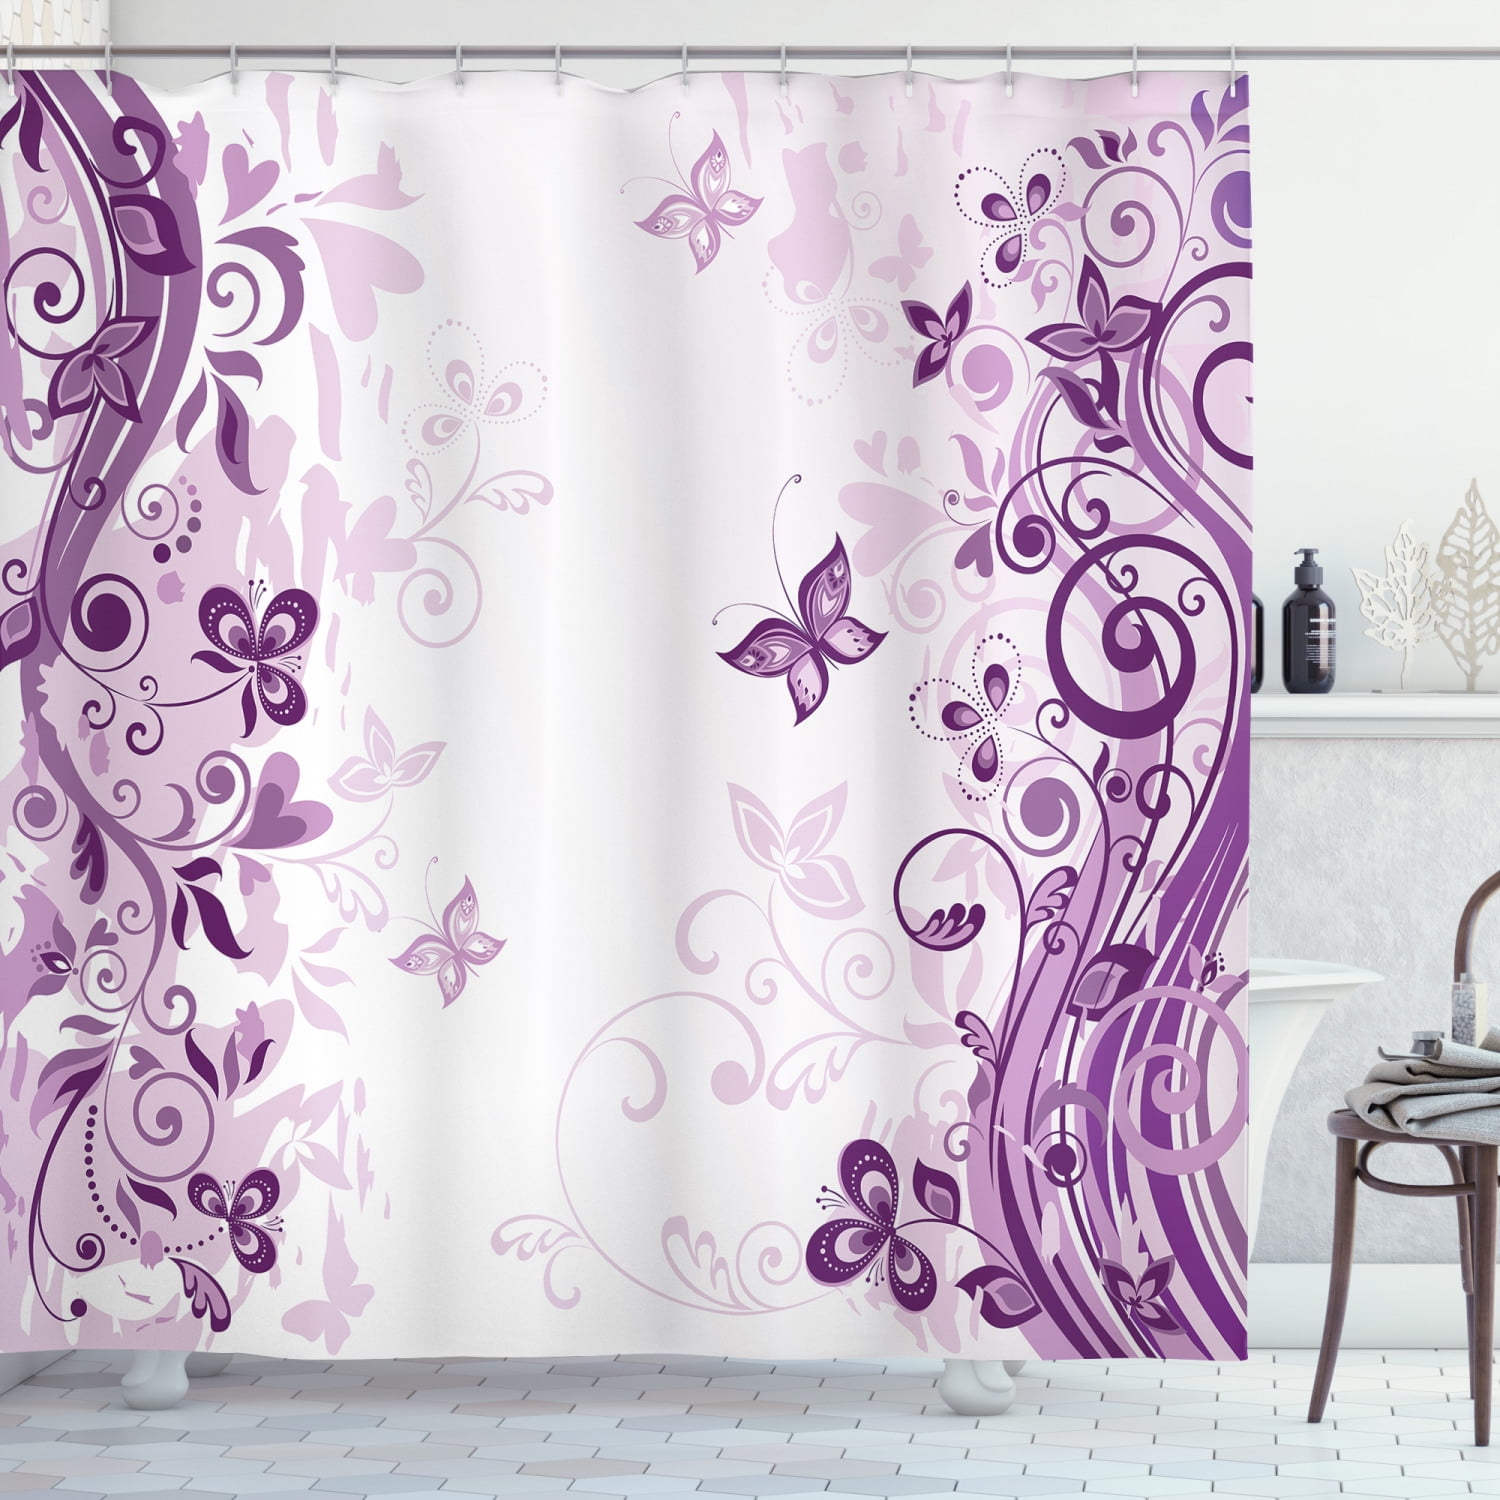 Waterproof Abstract Beauty Butterfly Flower Shower Curtain Liner Bathroom Hooks 